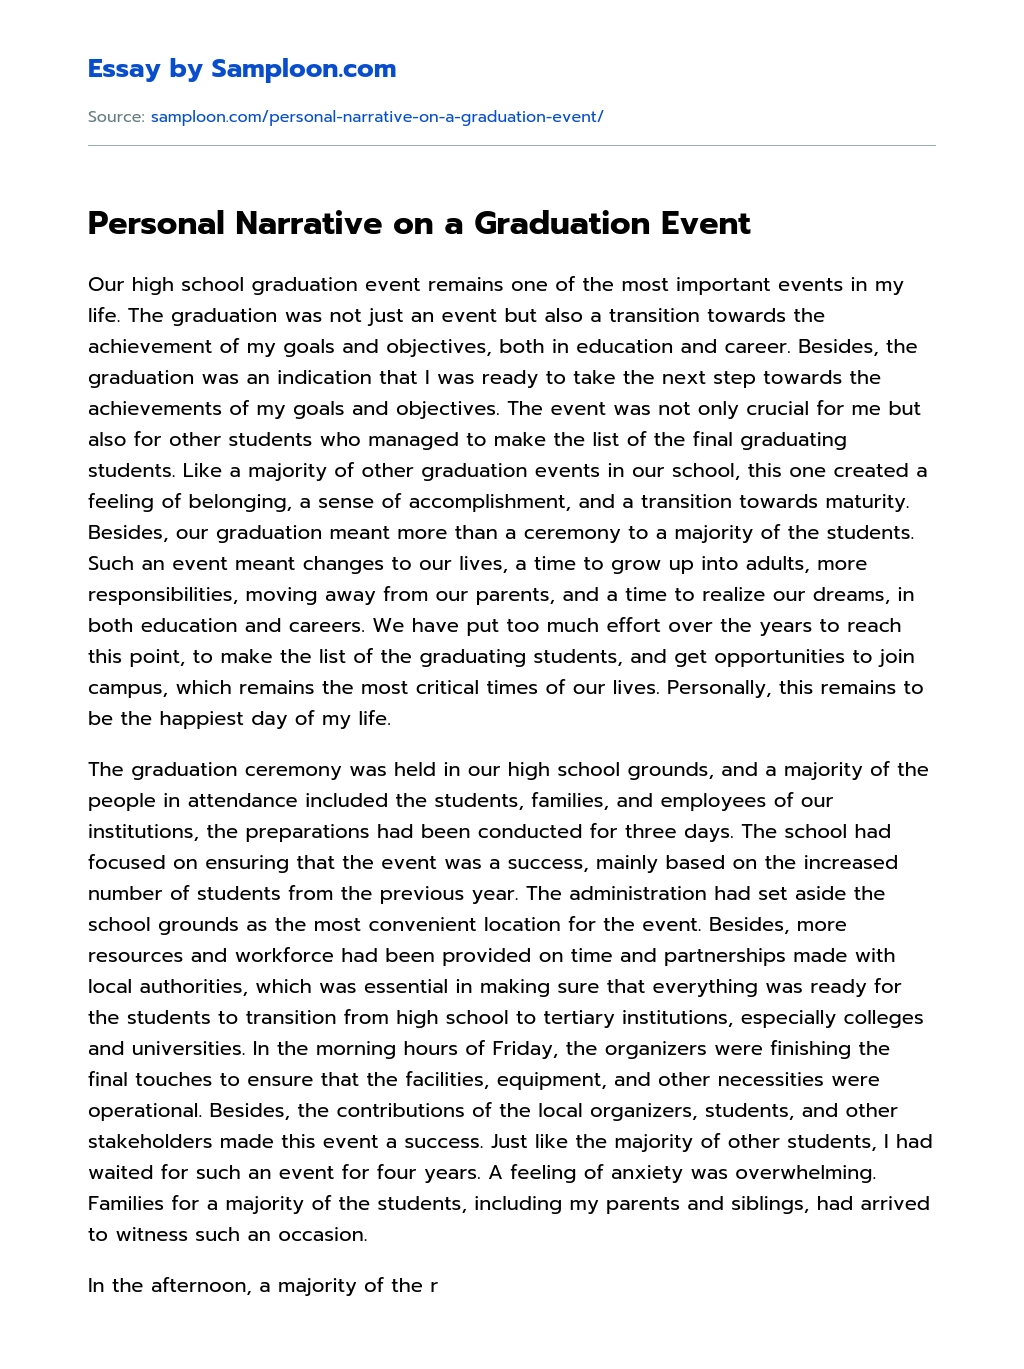 narrative essay about graduation ceremony